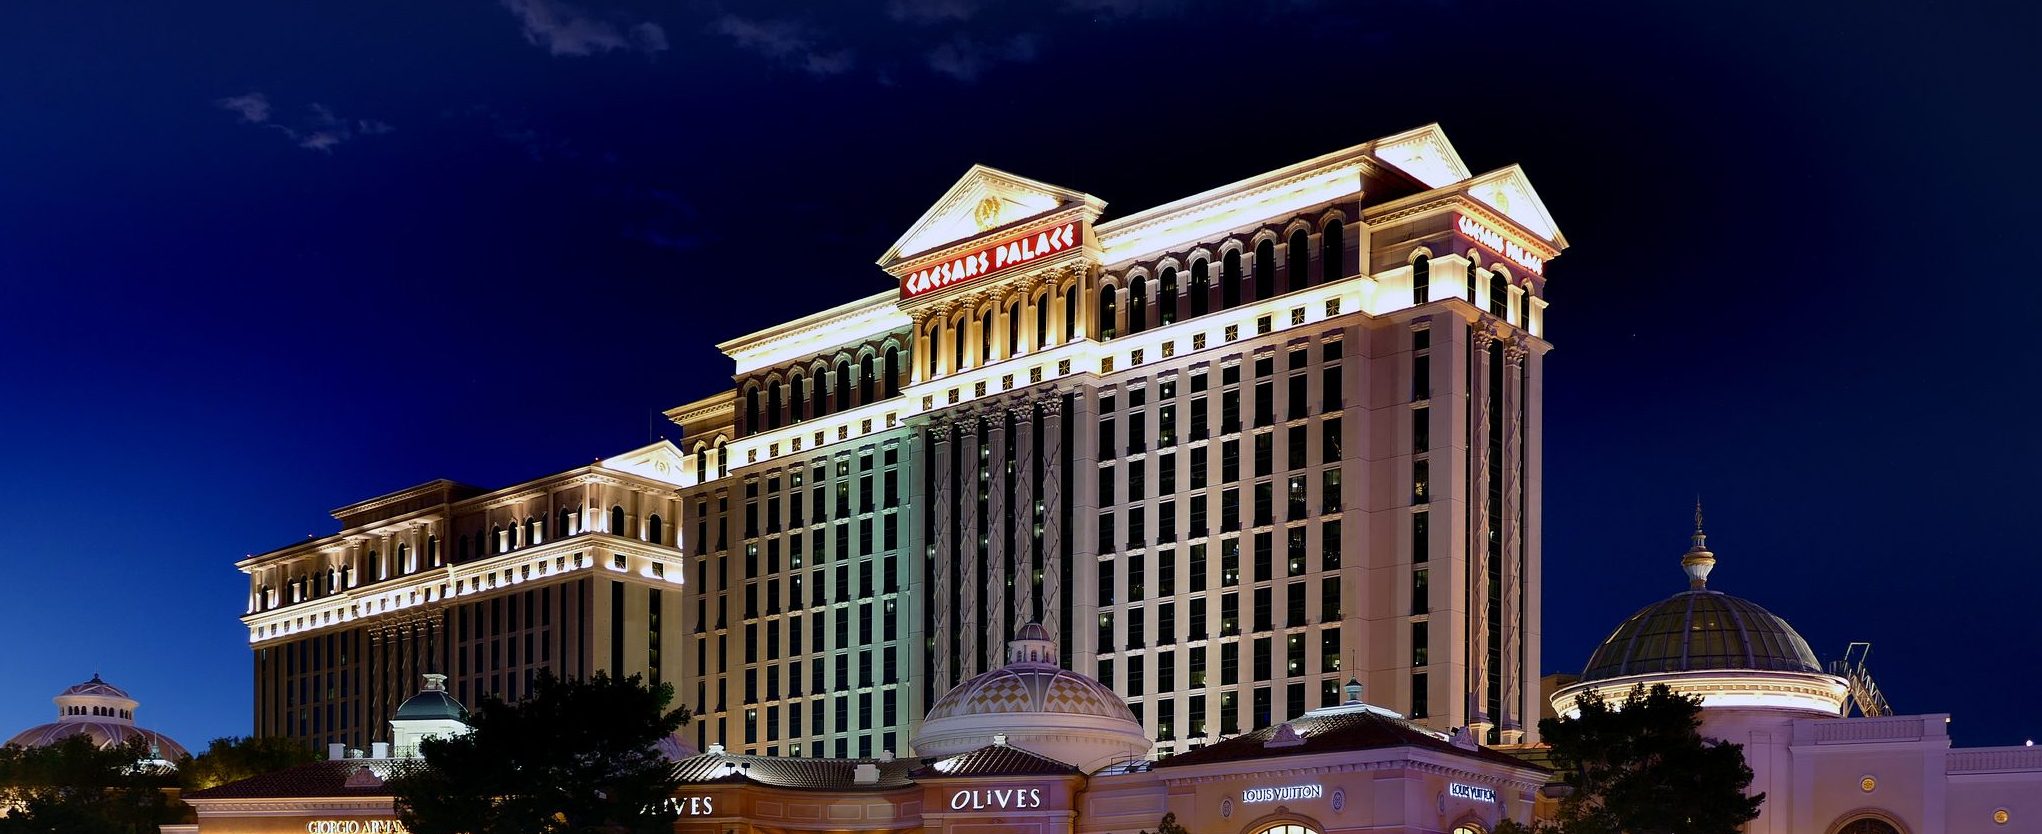 Caesars Palace Las Vegas|Resort Hotel und Casino in Atlantic City